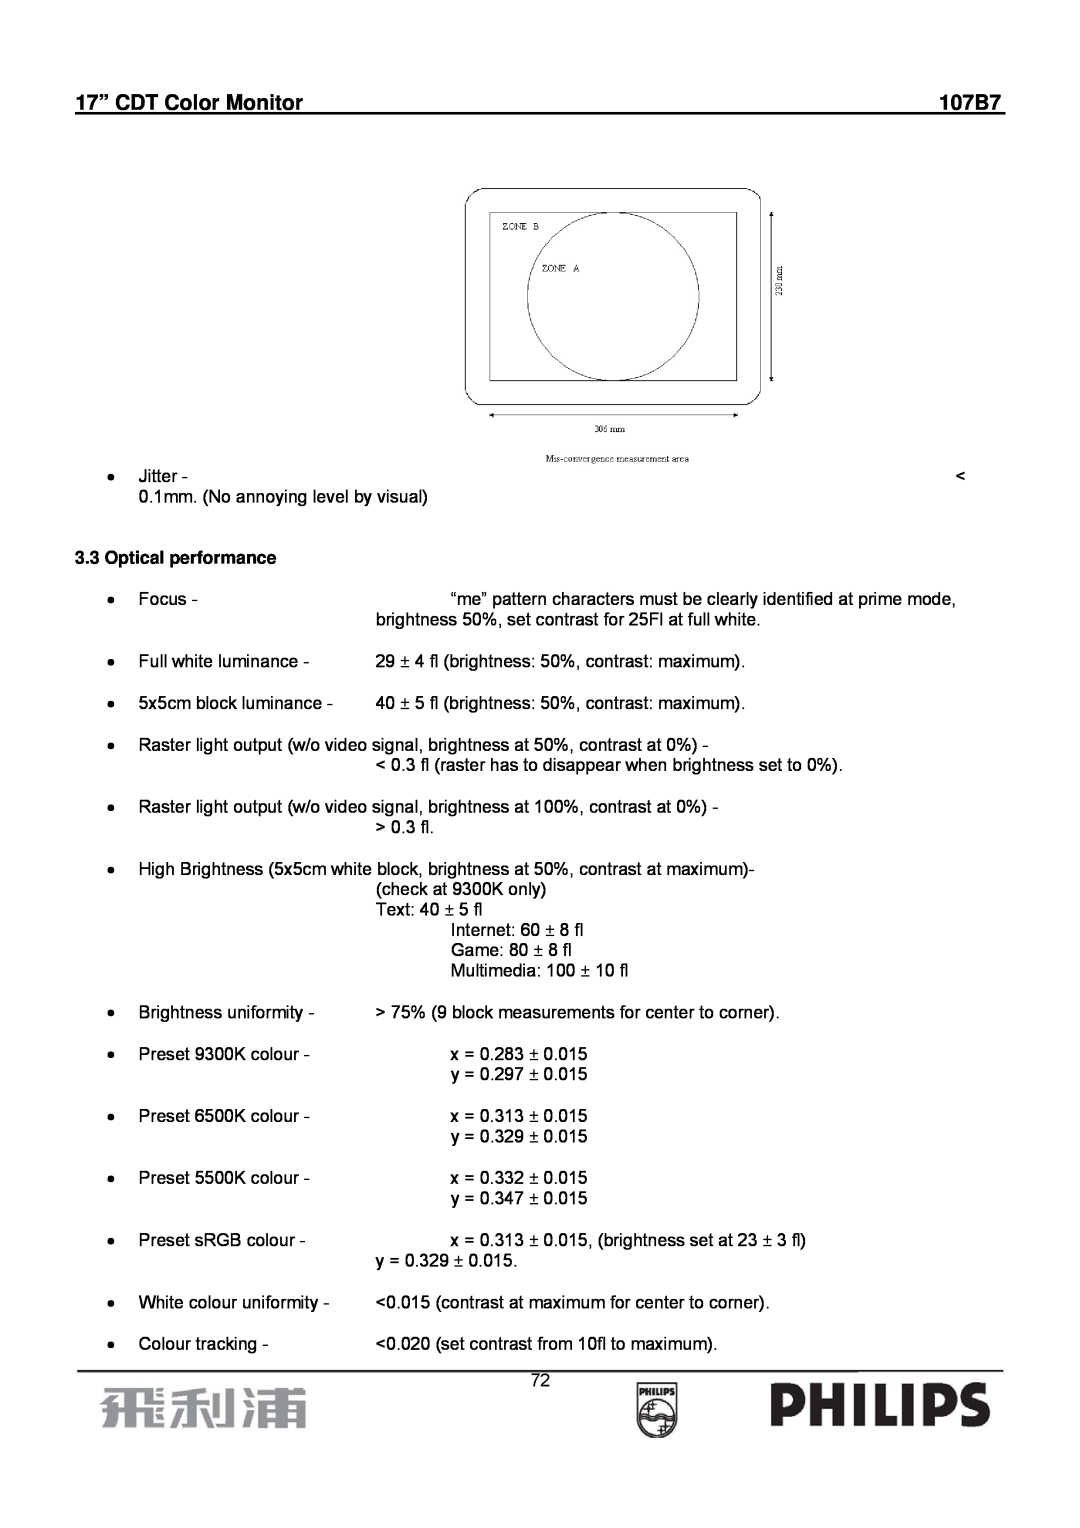 Philips 107B7 manual 17” CDT Color Monitor, Optical performance, ± 0.015, brightness set at 23 ± 3 fl 